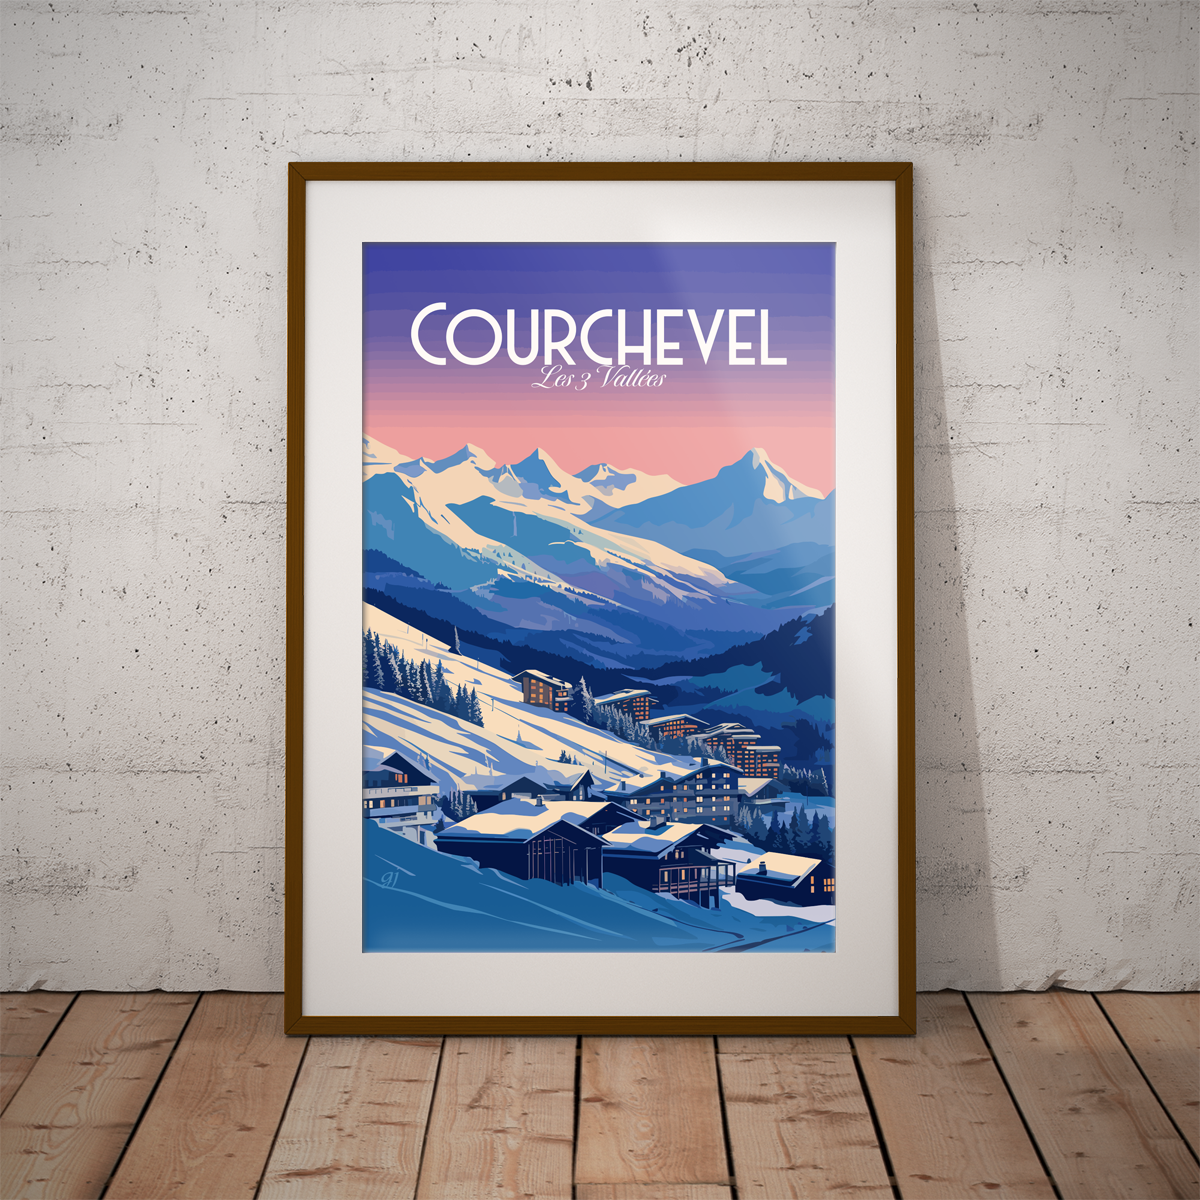 Courchevel poster by bon voyage design